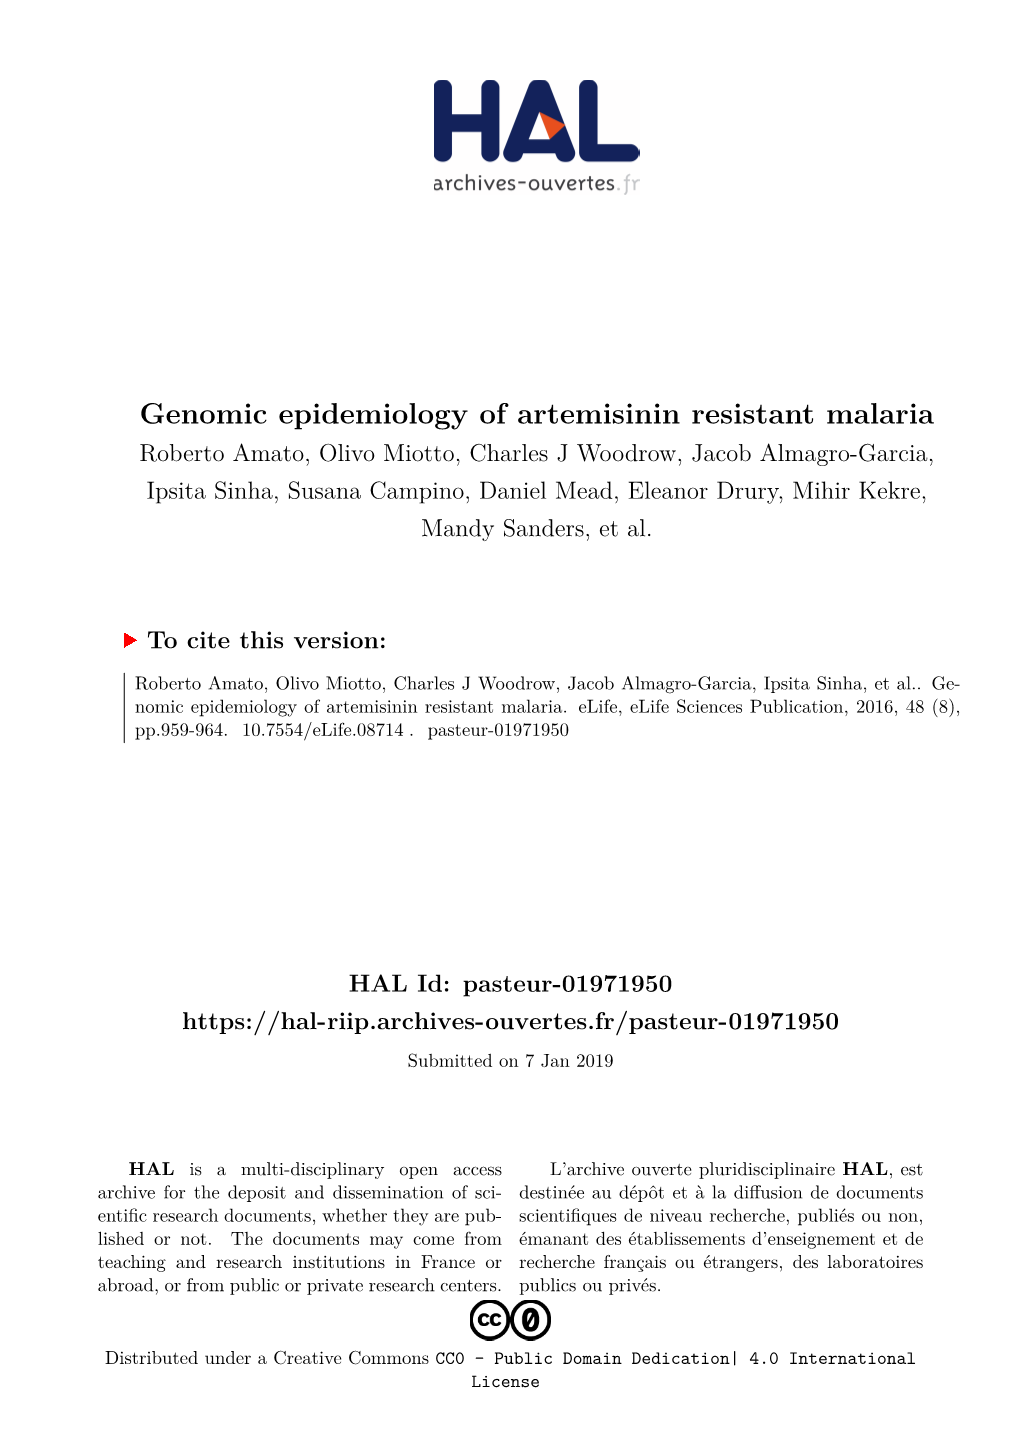 Genomic Epidemiology of Artemisinin Resistant Malaria